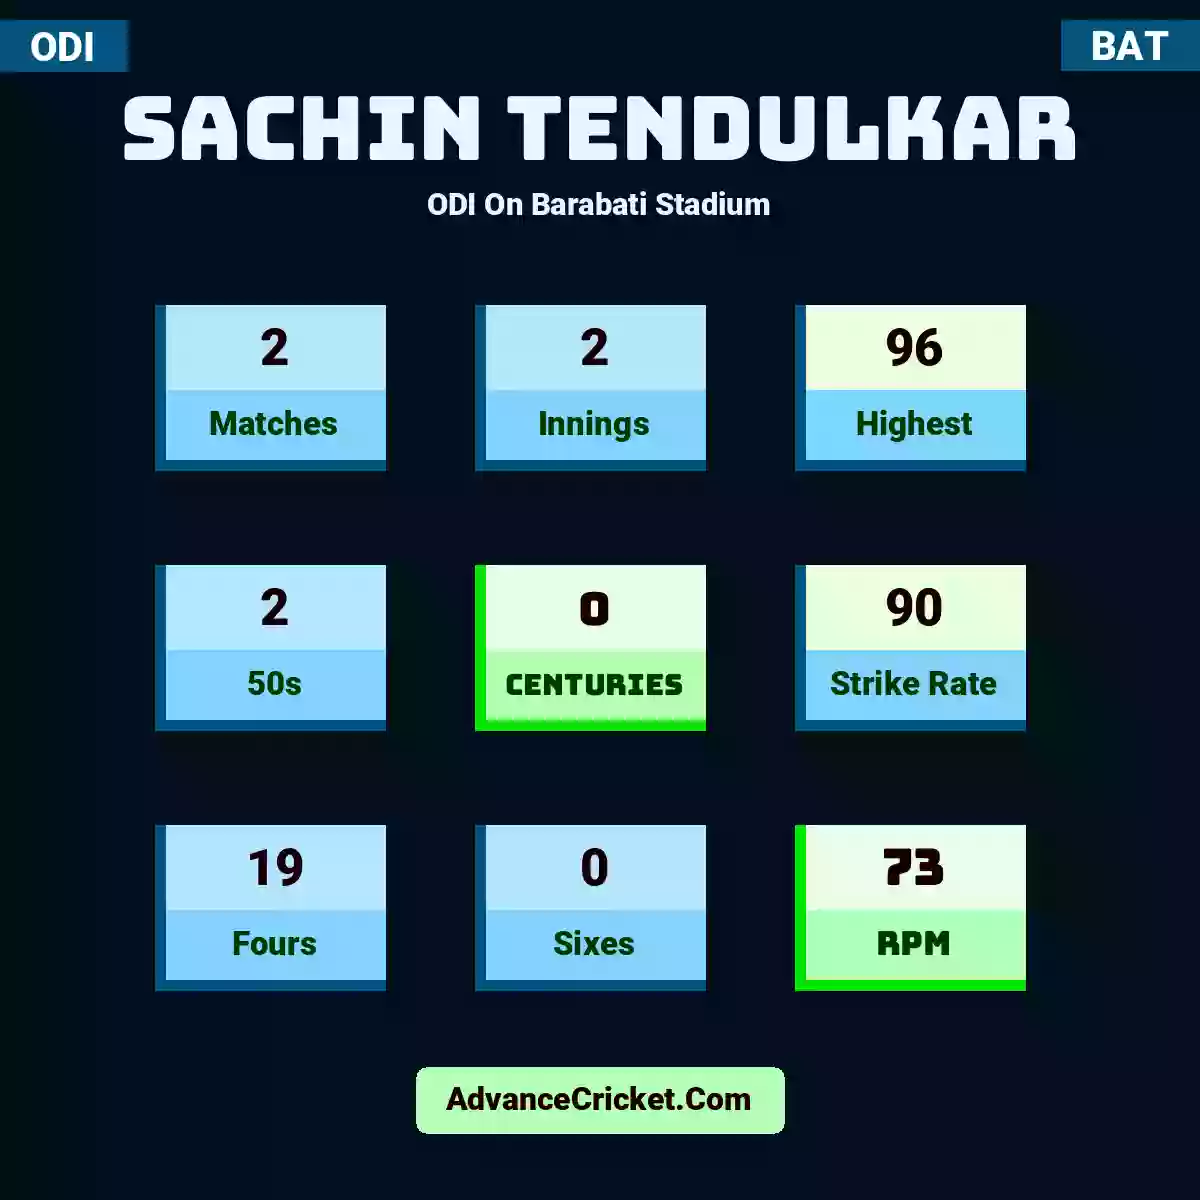 Sachin Tendulkar ODI  On Barabati Stadium, Sachin Tendulkar played 2 matches, scored 96 runs as highest, 2 half-centuries, and 0 centuries, with a strike rate of 90. S.Tendulkar hit 19 fours and 0 sixes, with an RPM of 73.